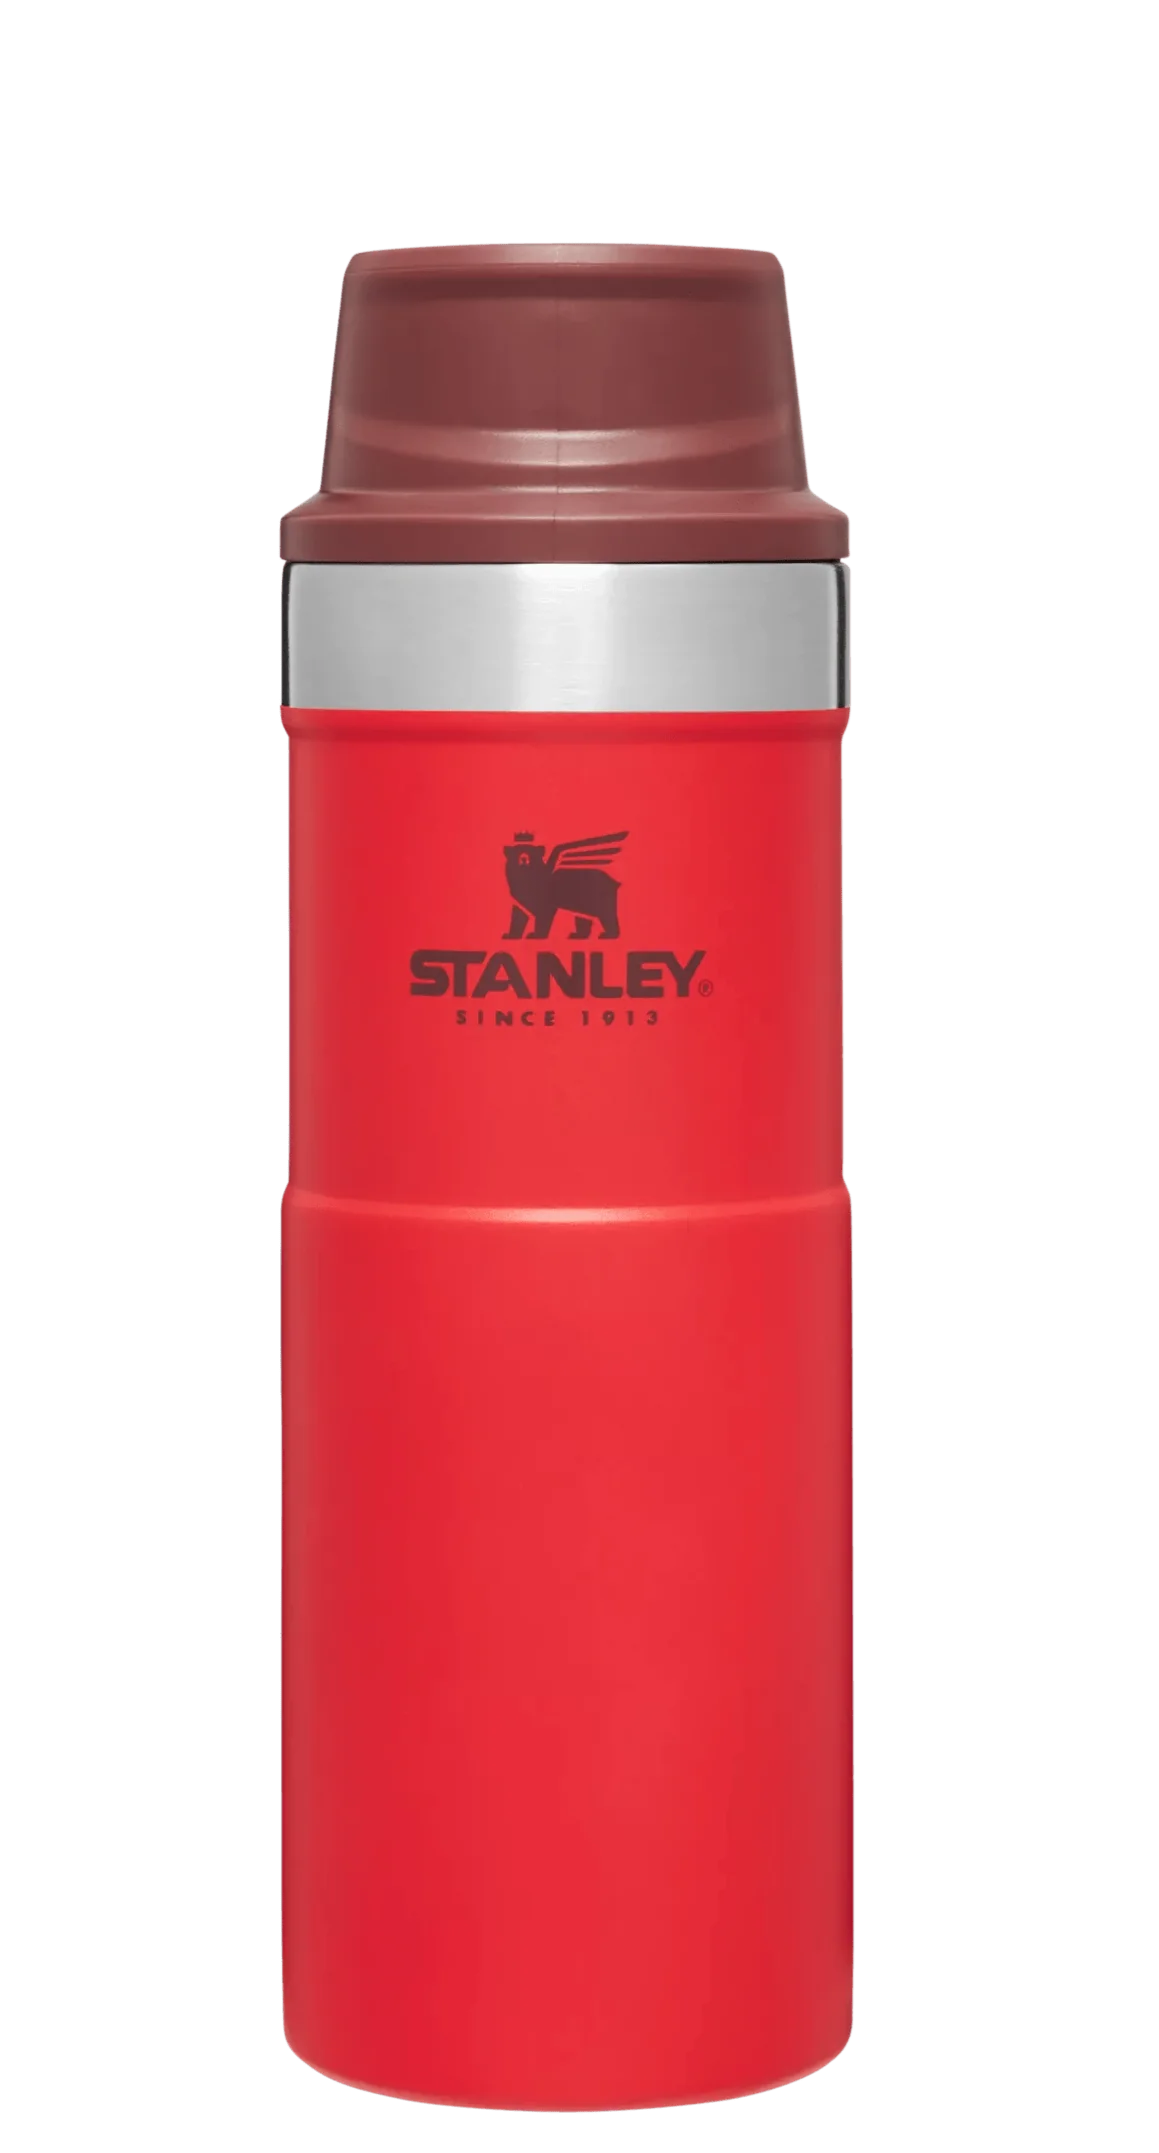 Stanley The Trigger-Action Travel Mug 16 oz Rose Quartz Glow